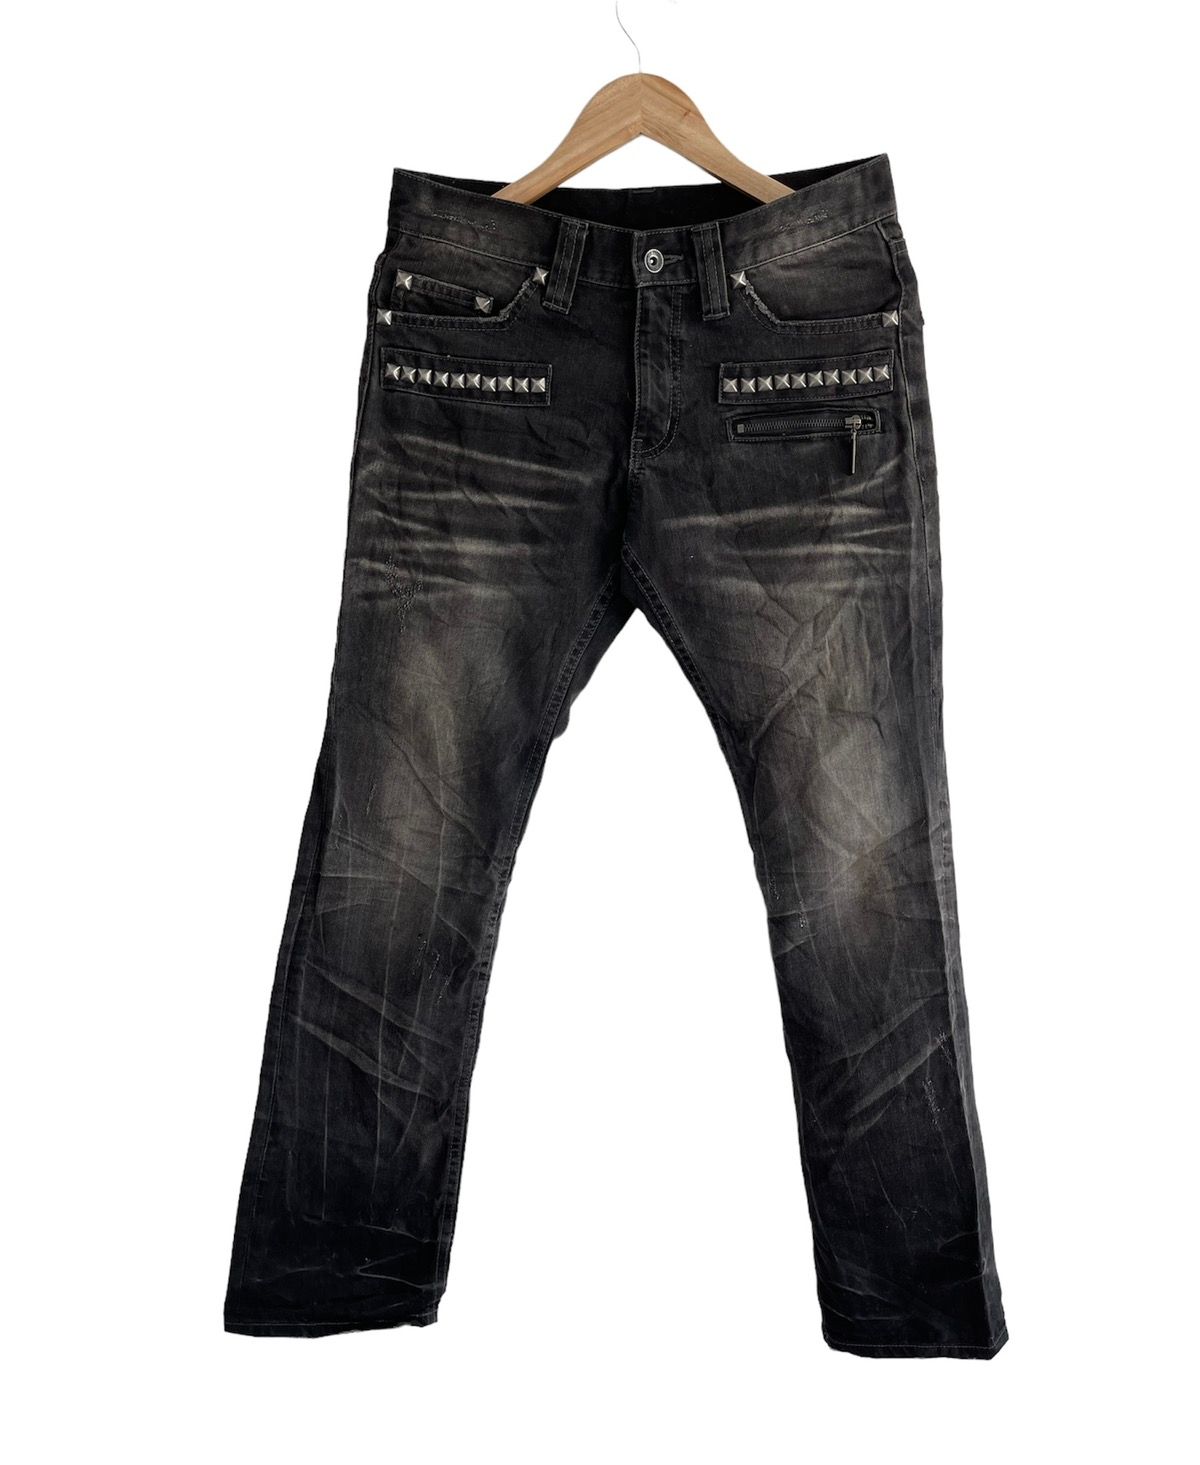 Japanese Brand - SEMANTIC DESIGN Punk Style Zipper Bootcut Flared Jeans - 1